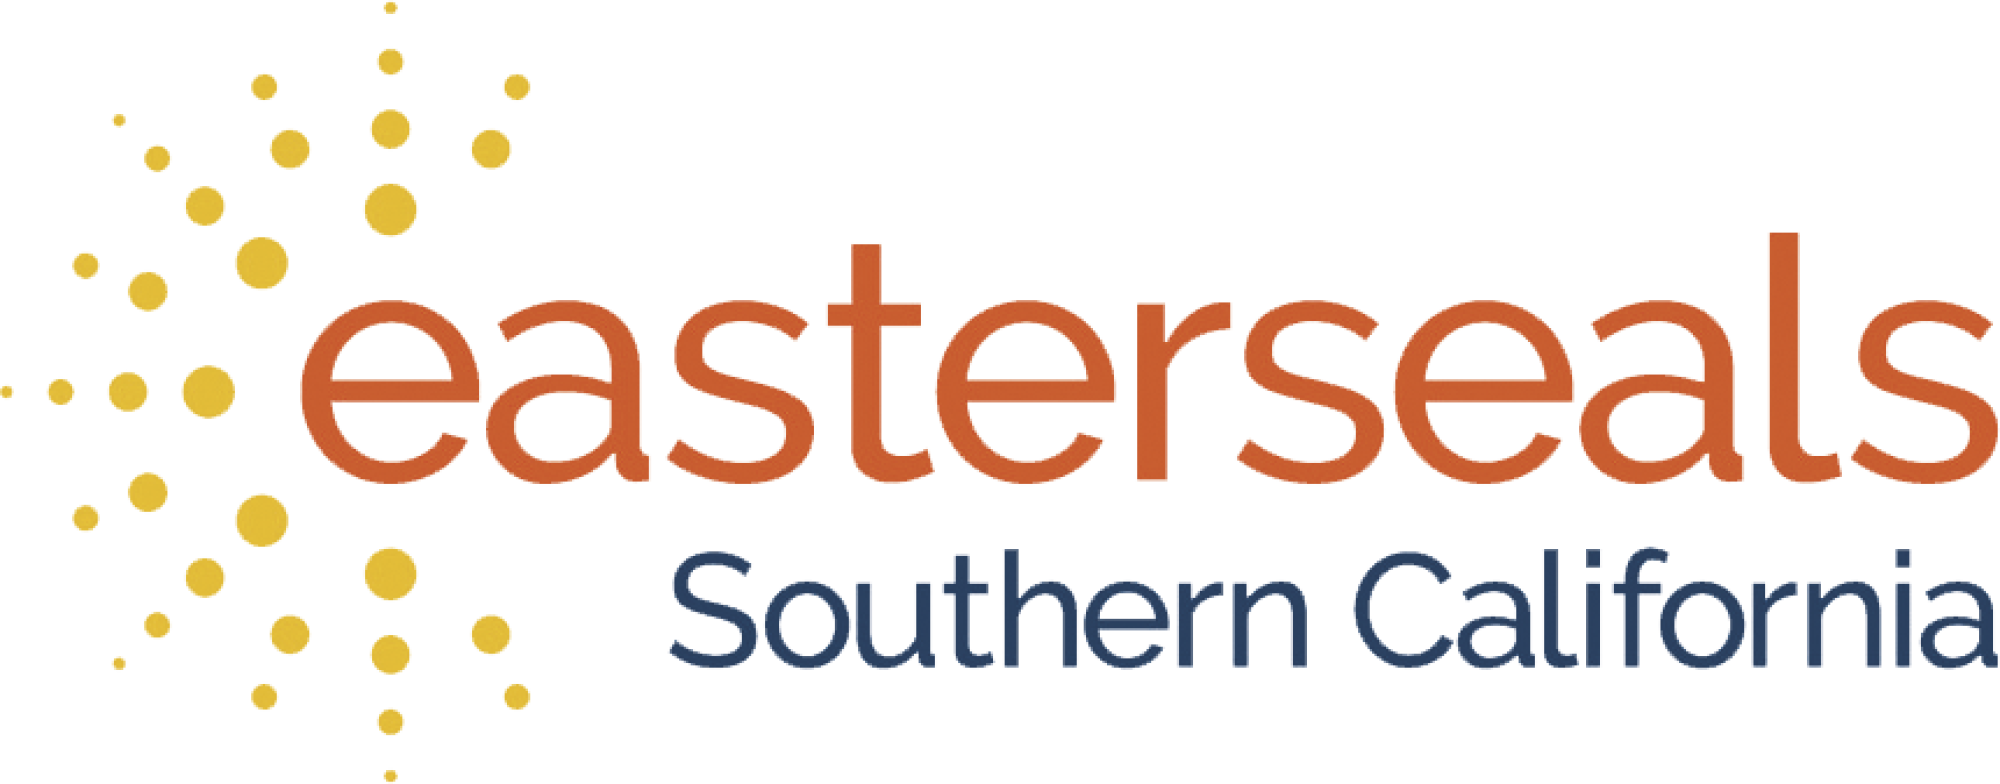 Easterseals Southern California logo